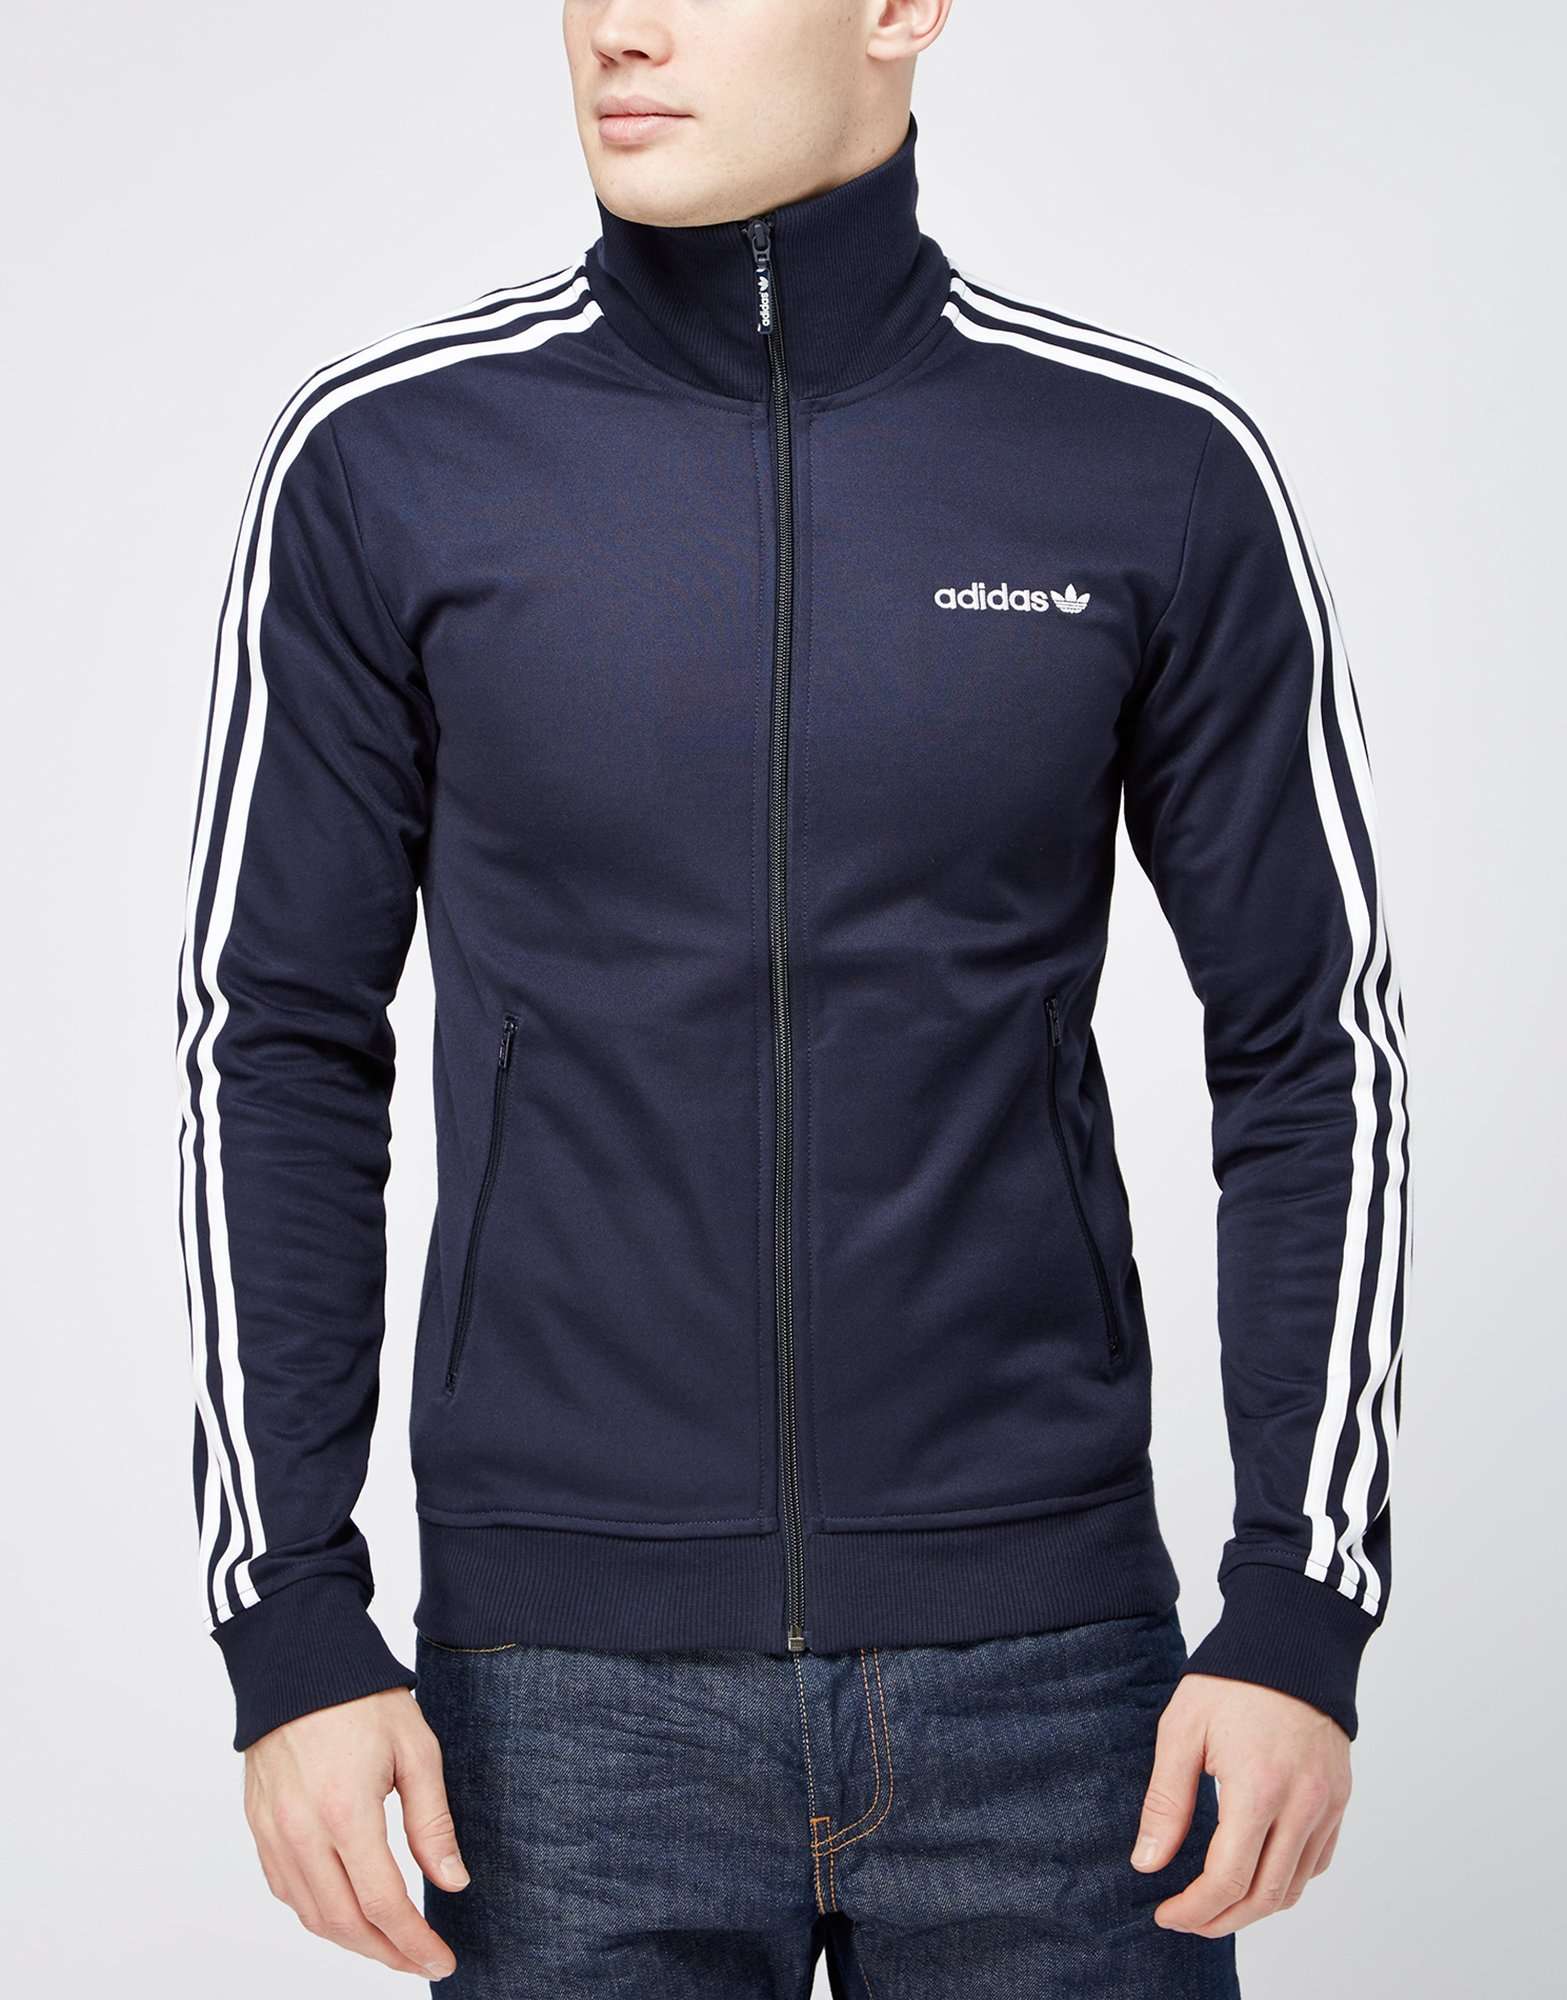 adidas Originals Beckenbauer Track Top | scotts Menswear